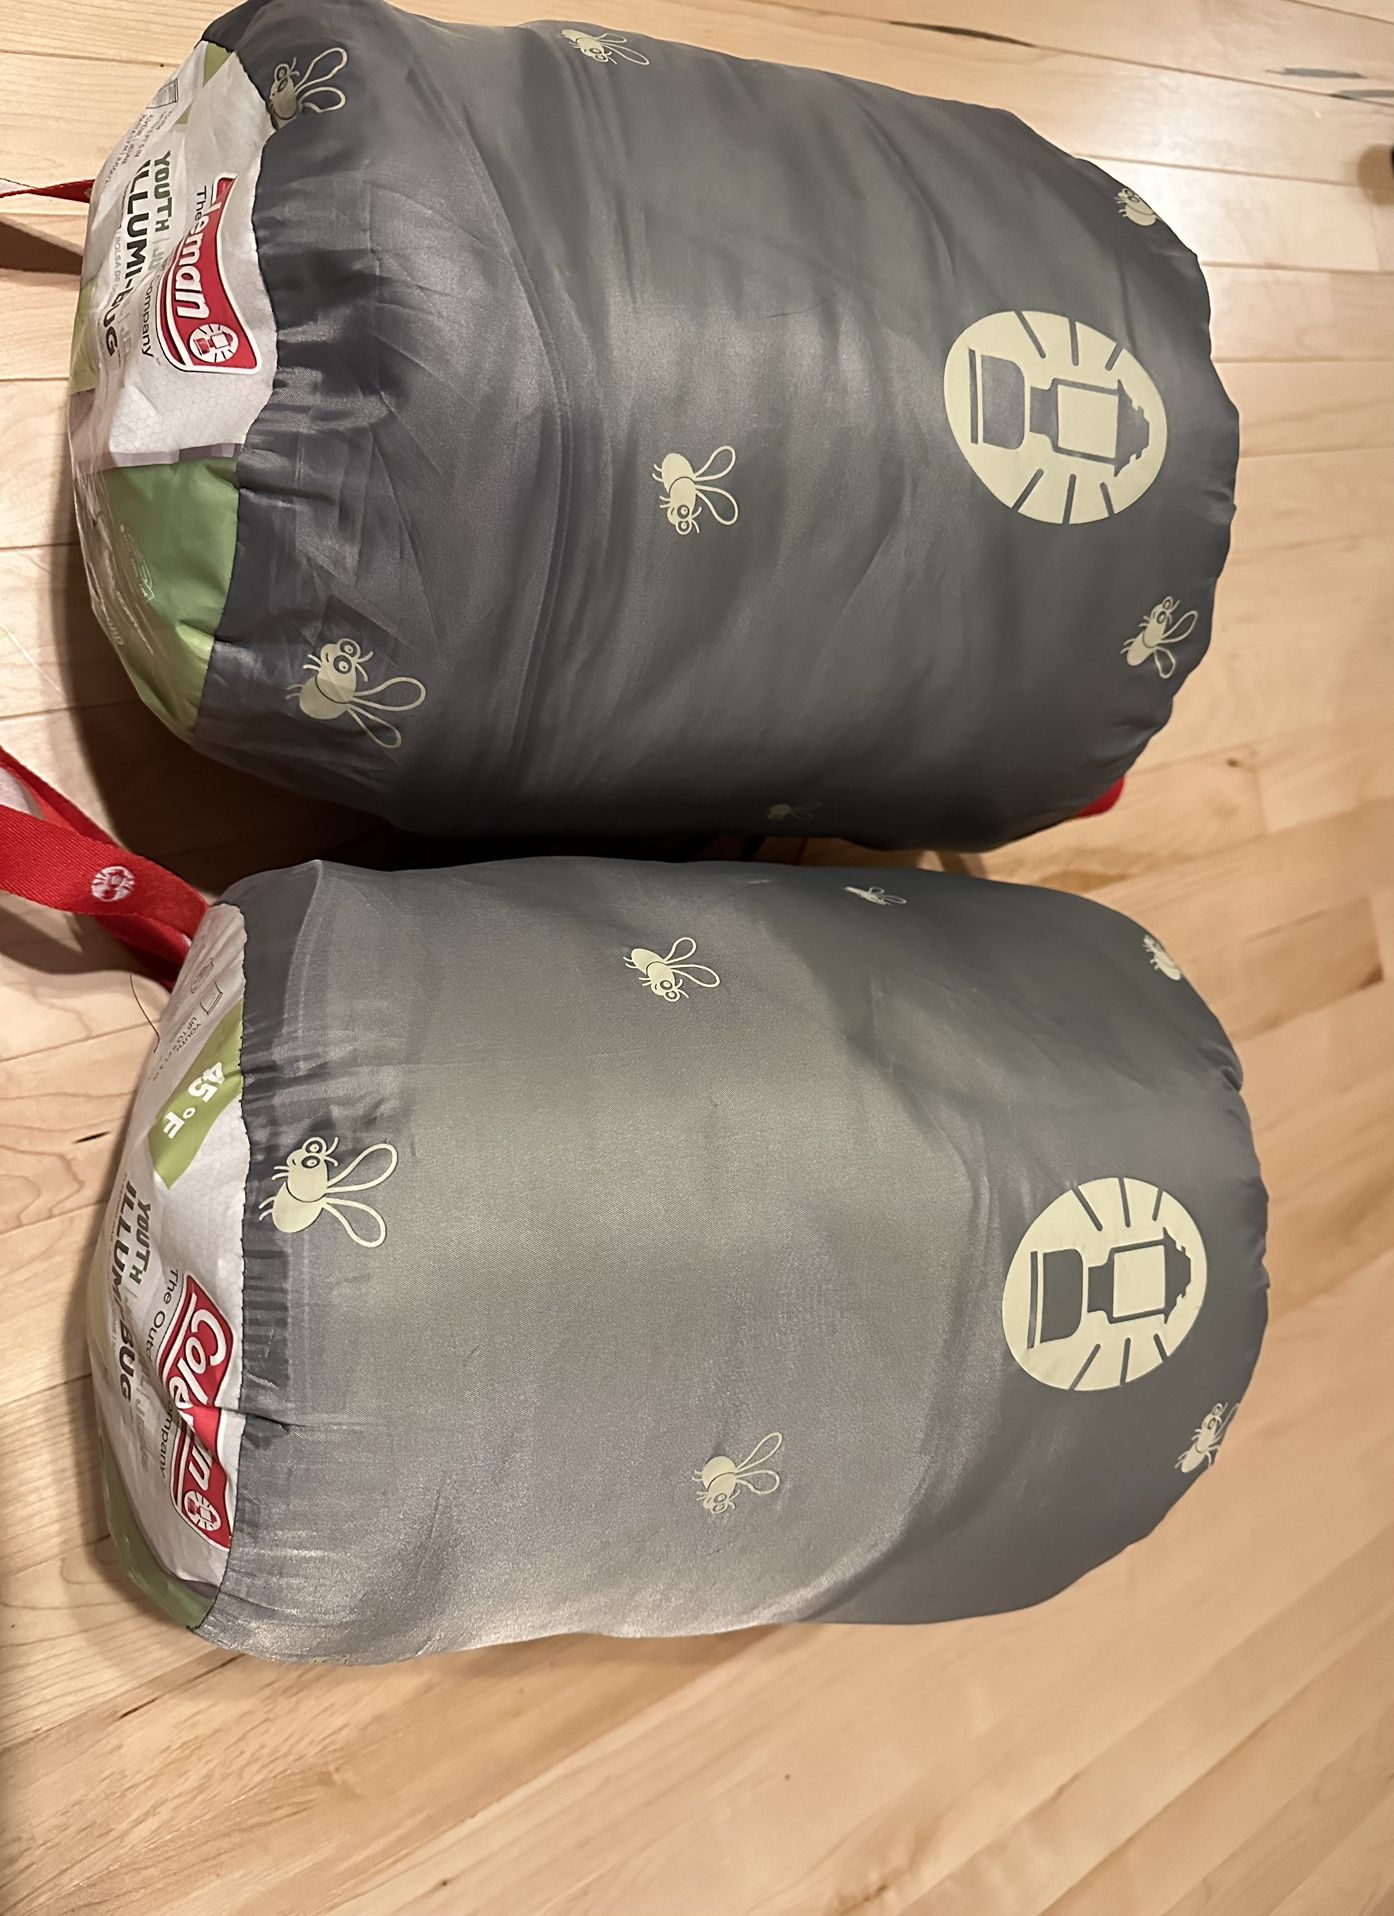 Two Kid’s Sleeping Bags, Brand: Coleman